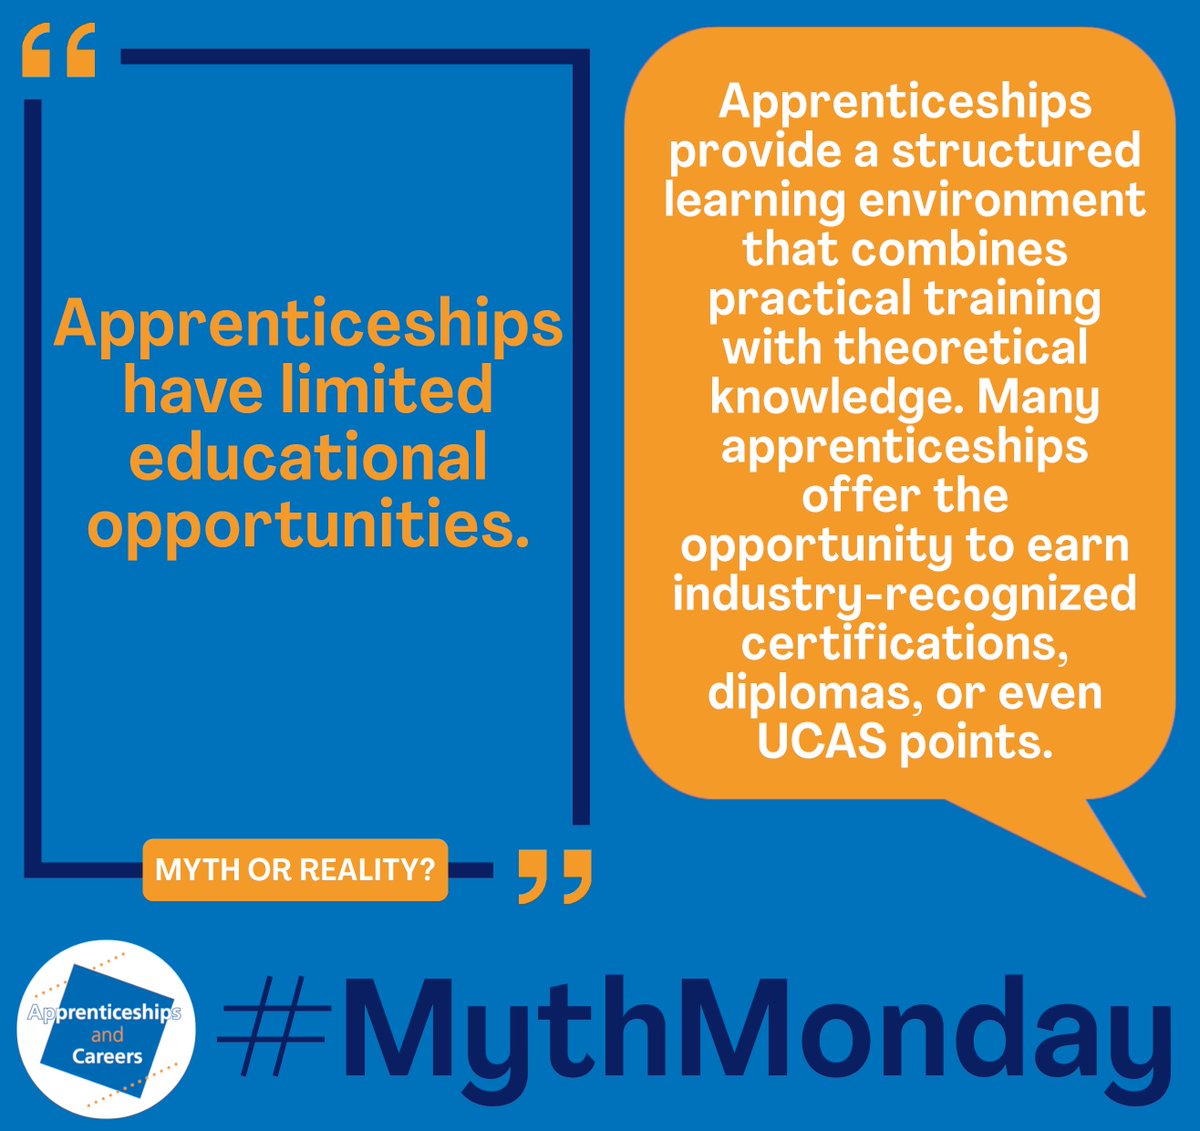 #MythMonday

Some further #mythbusting regarding #apprenticeship #opportunities.

#CareersDay #CareersFamily #SkillsforLife #StepintotheNHS #WearetheNHS